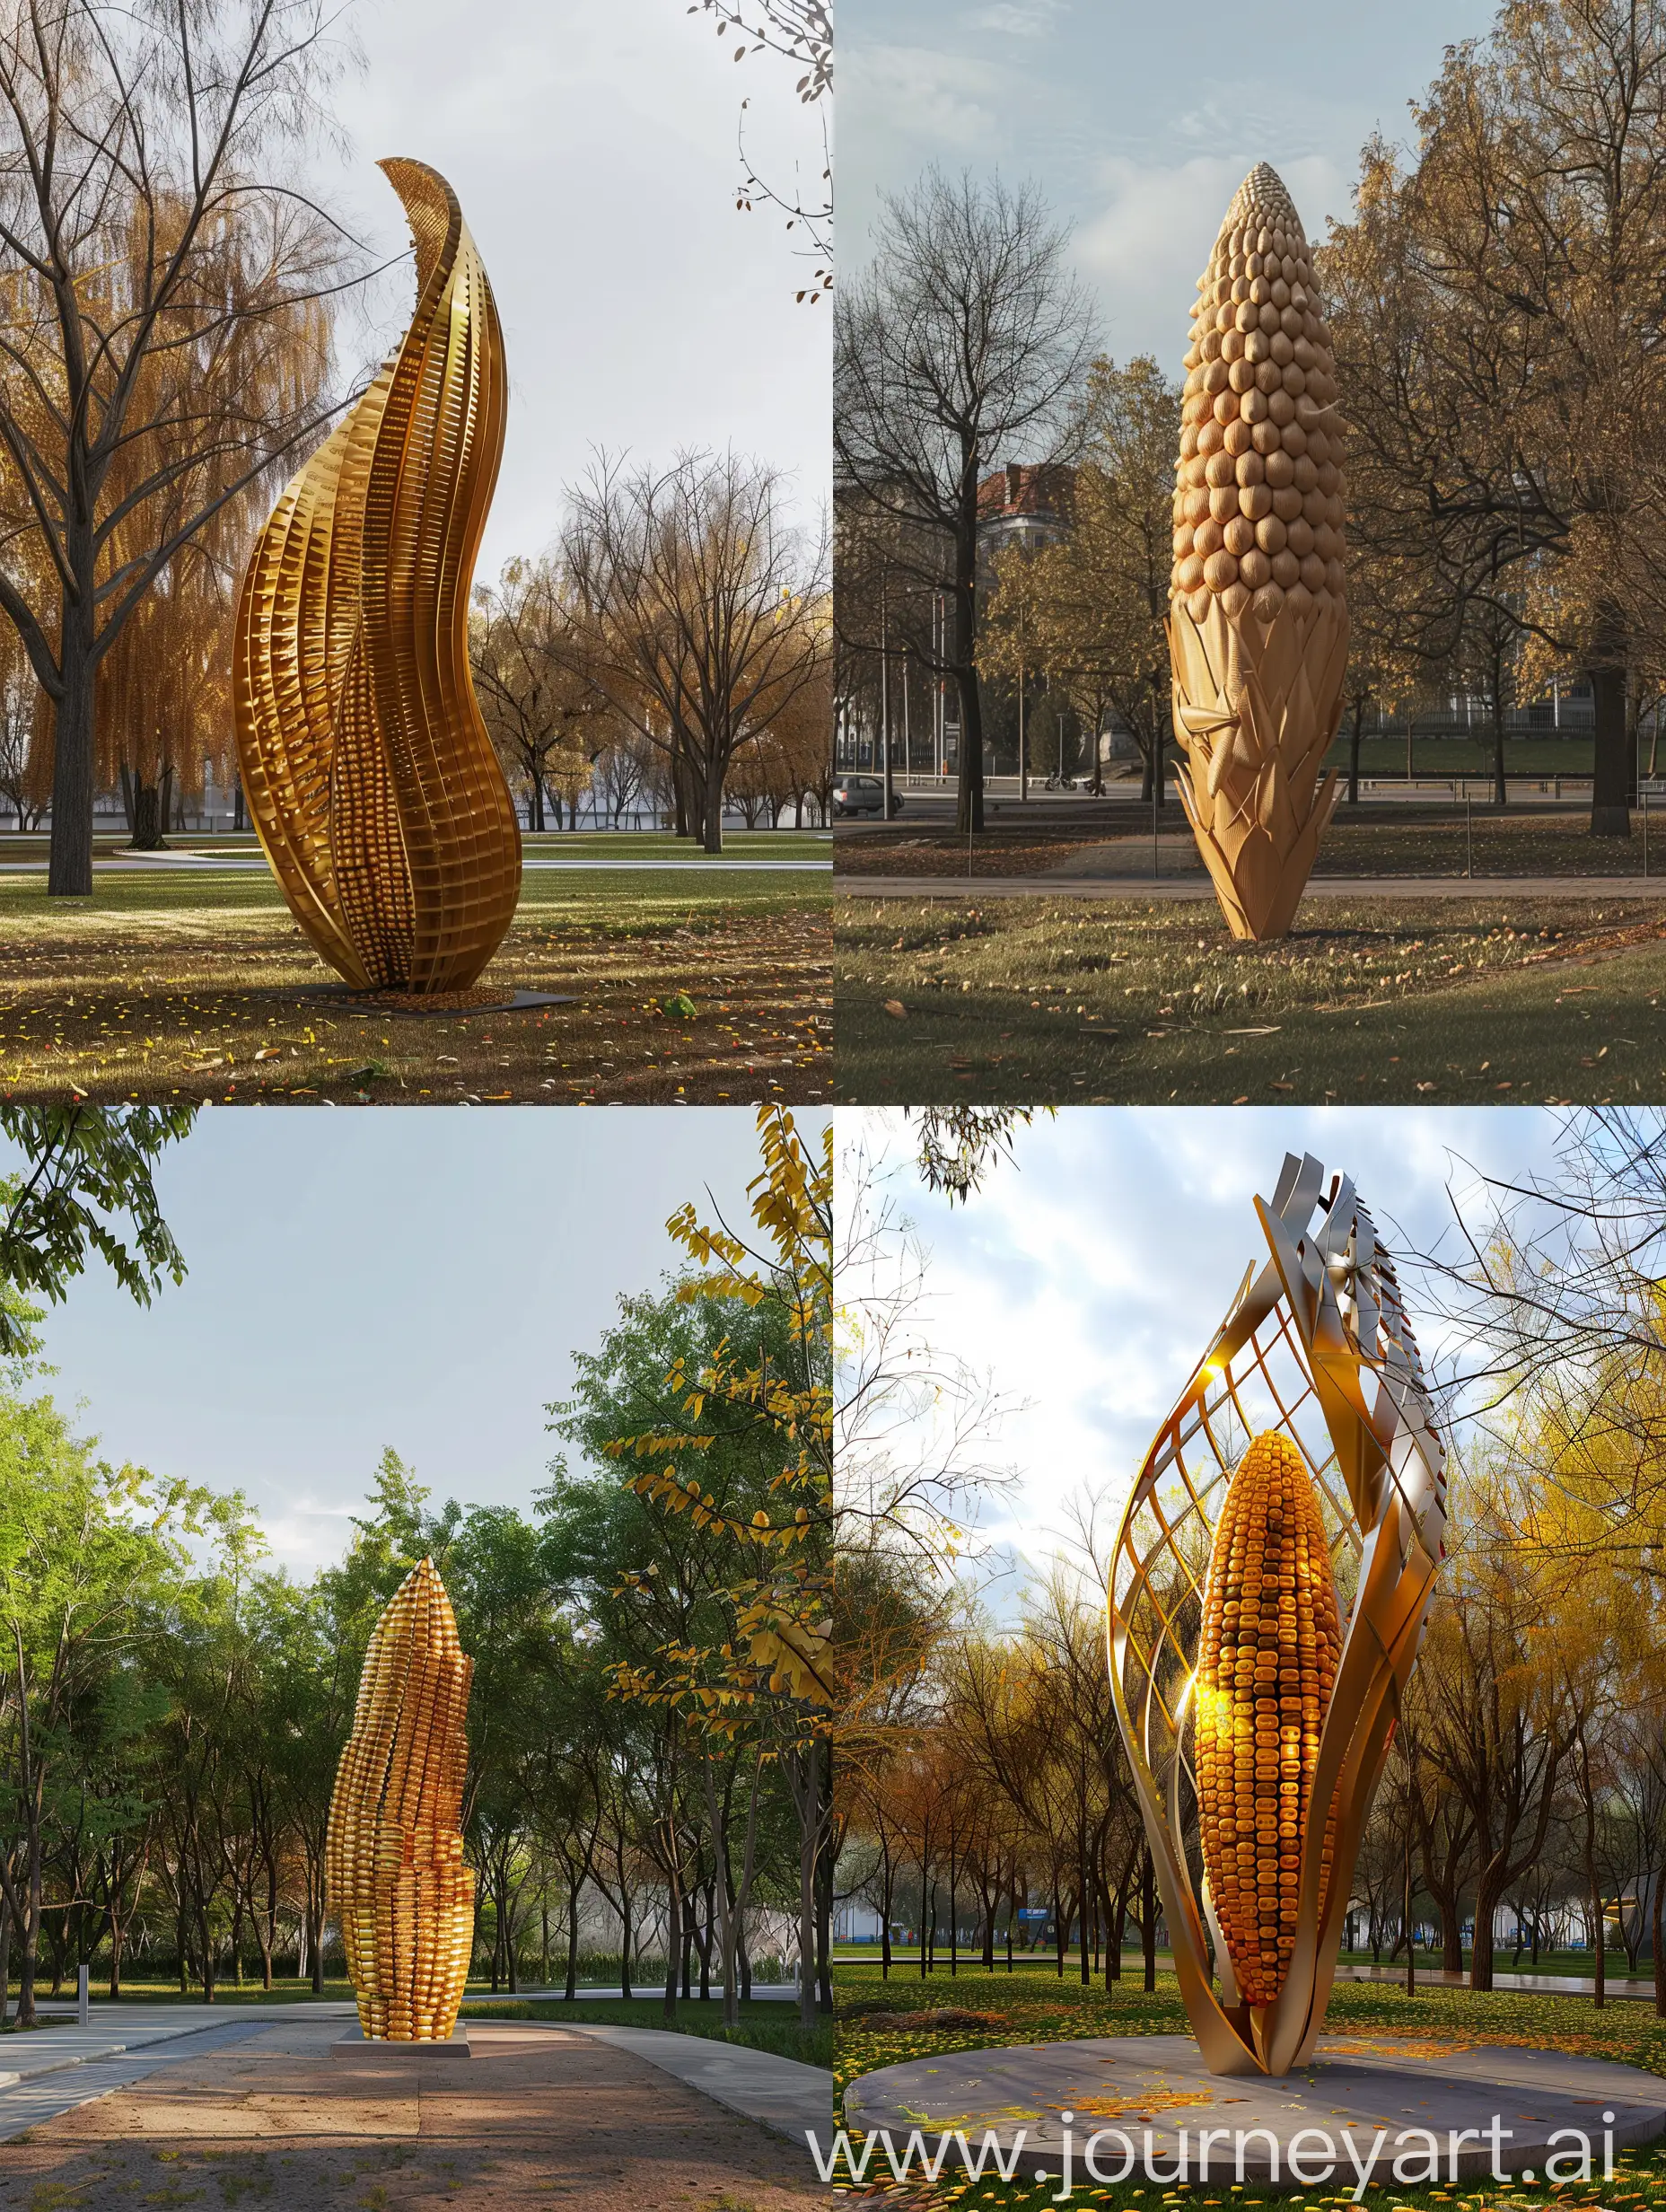 Minimalist-Agriculture-Sculpture-Corn-Cob-in-Park